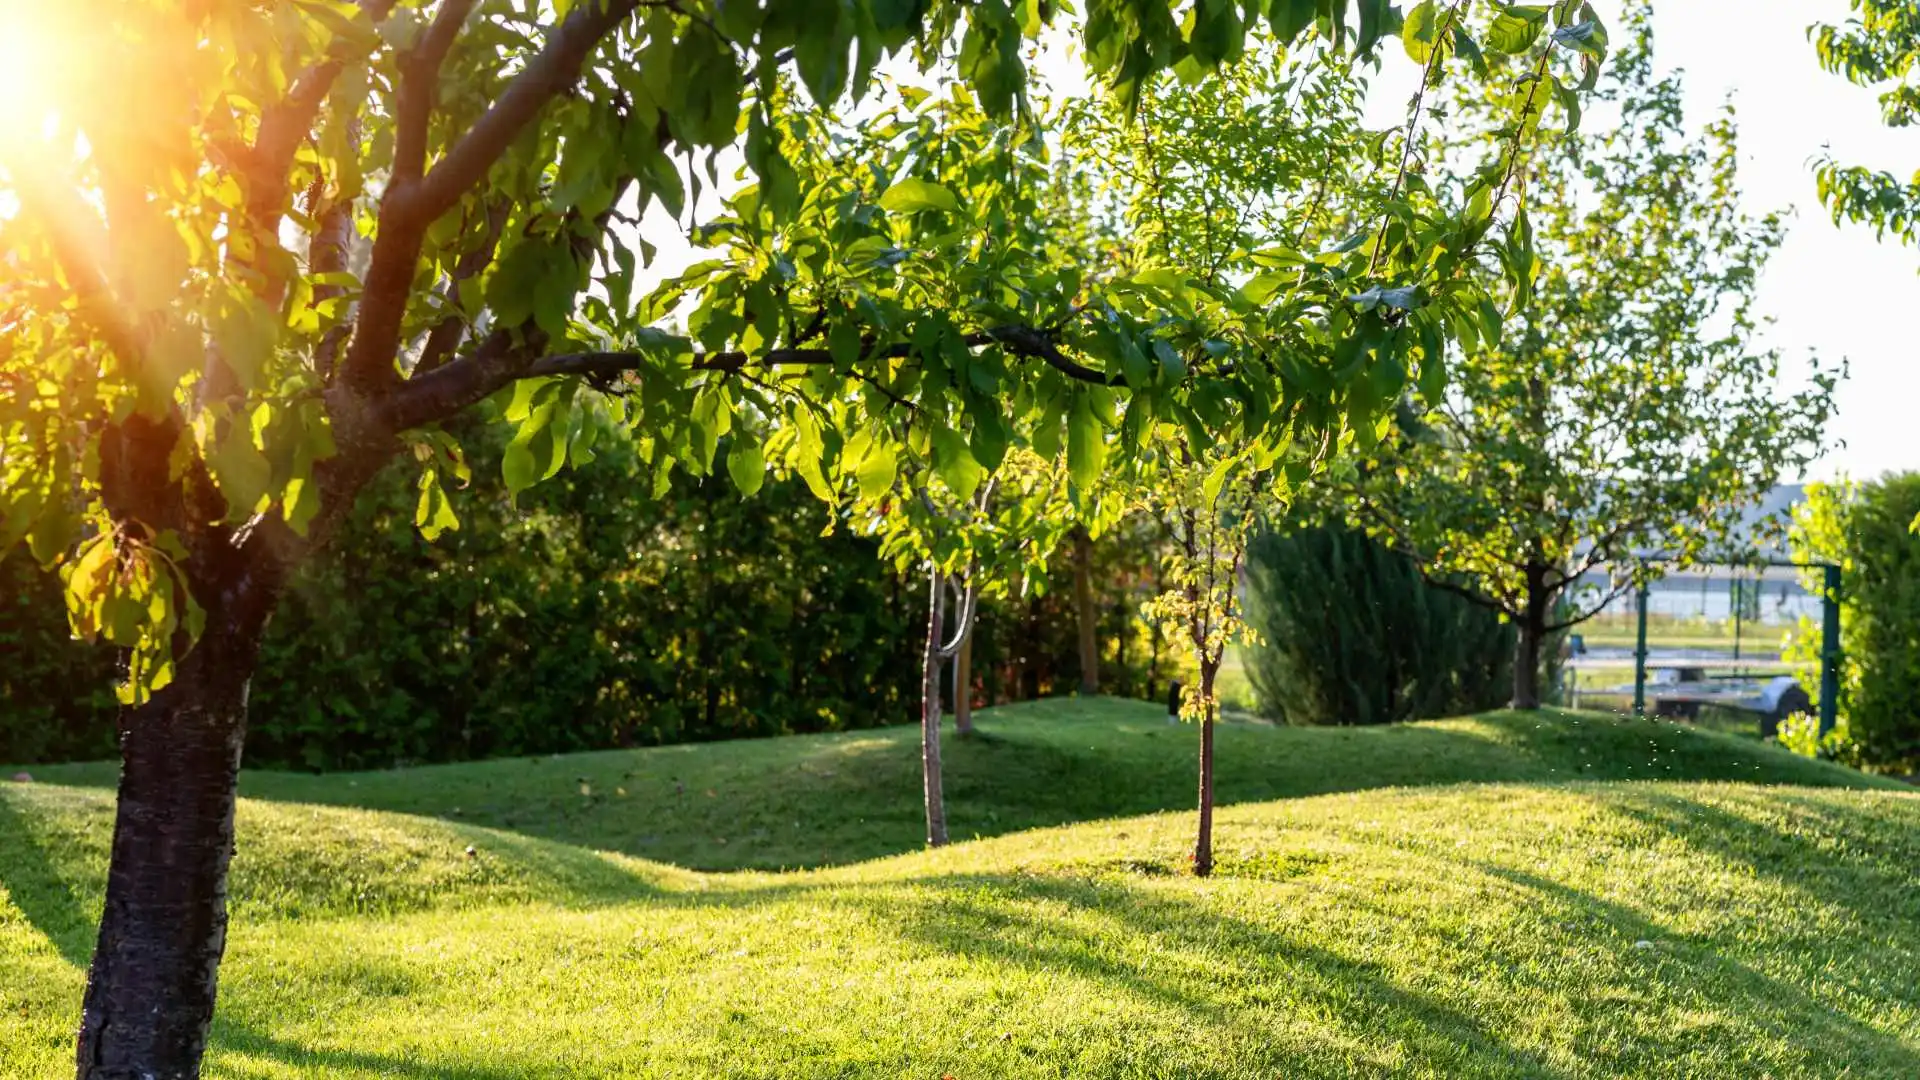 Healthy tree in landscaping after fertilizer treatments in Lansing, MI.